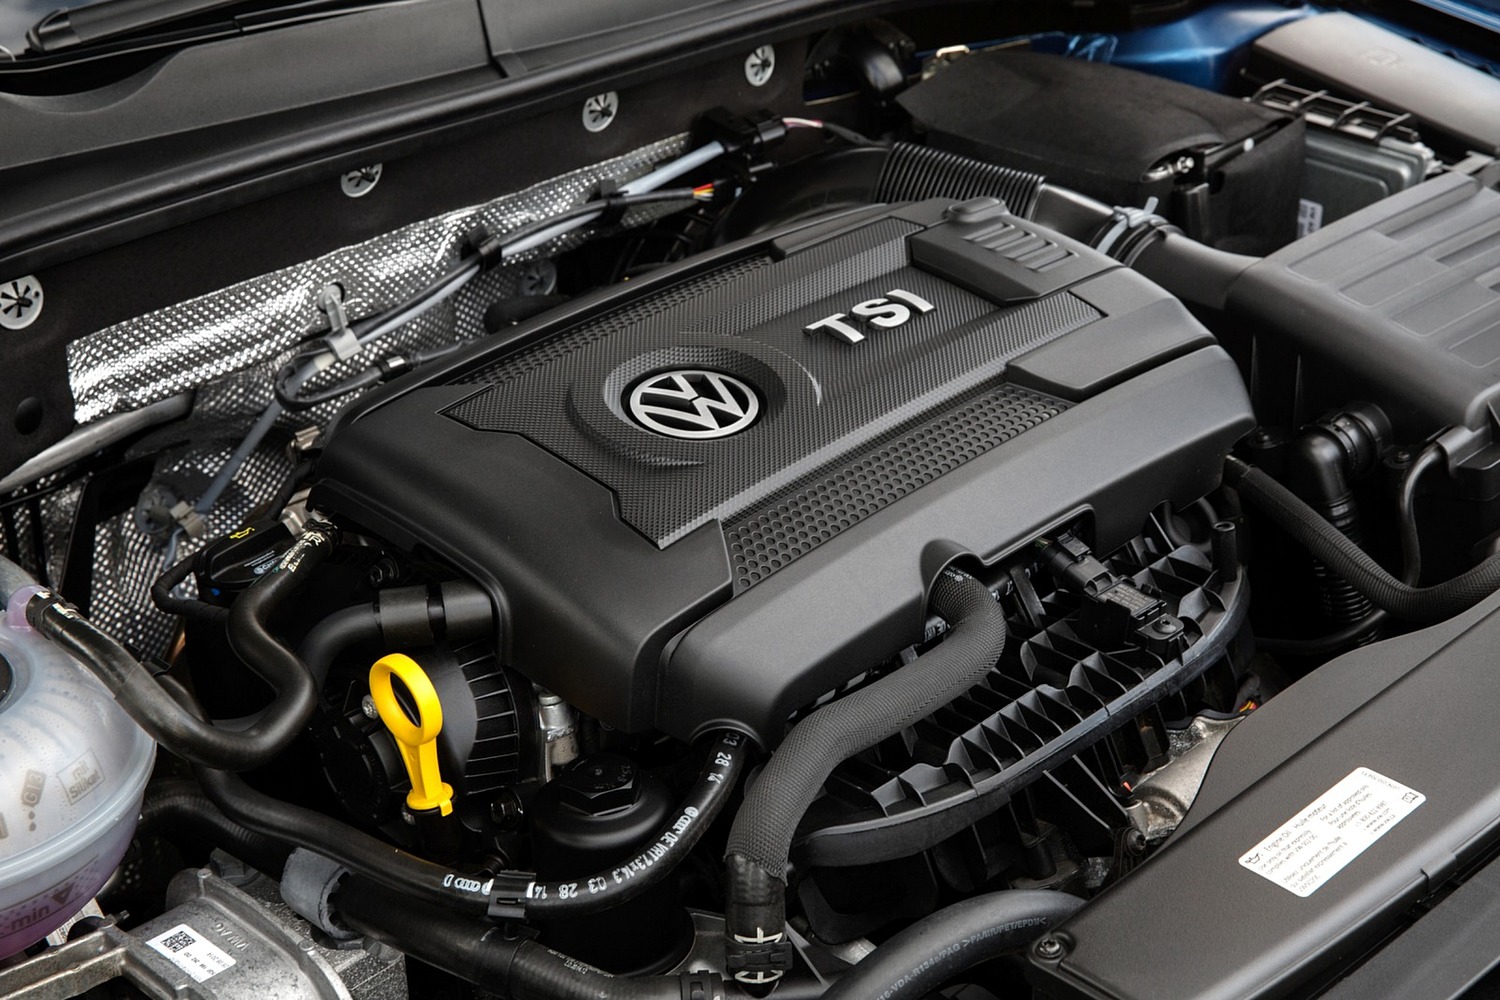 Volkswagen Golf SportWagen TSI SEL Wagon 1.8L I4 Turbocharged Engine (2015 model year shown)